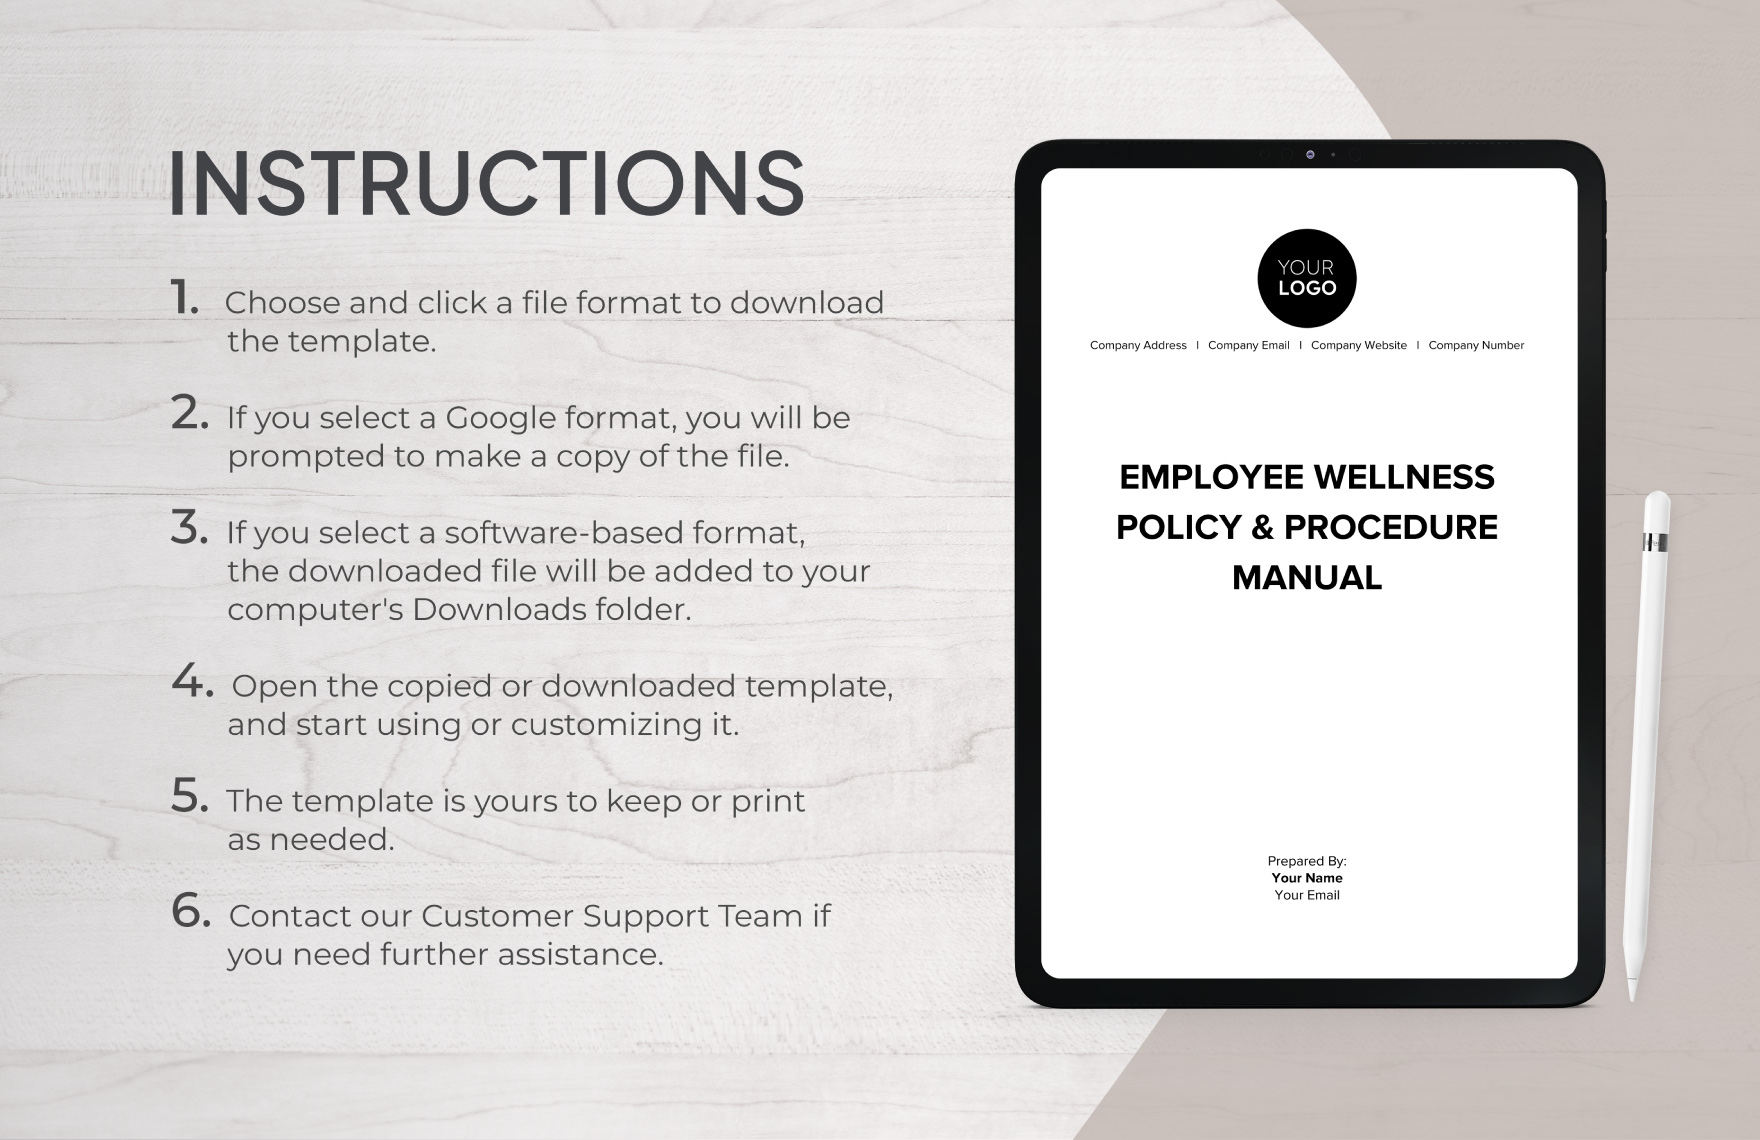 Employee Wellness Policy & Procedure Manual Template